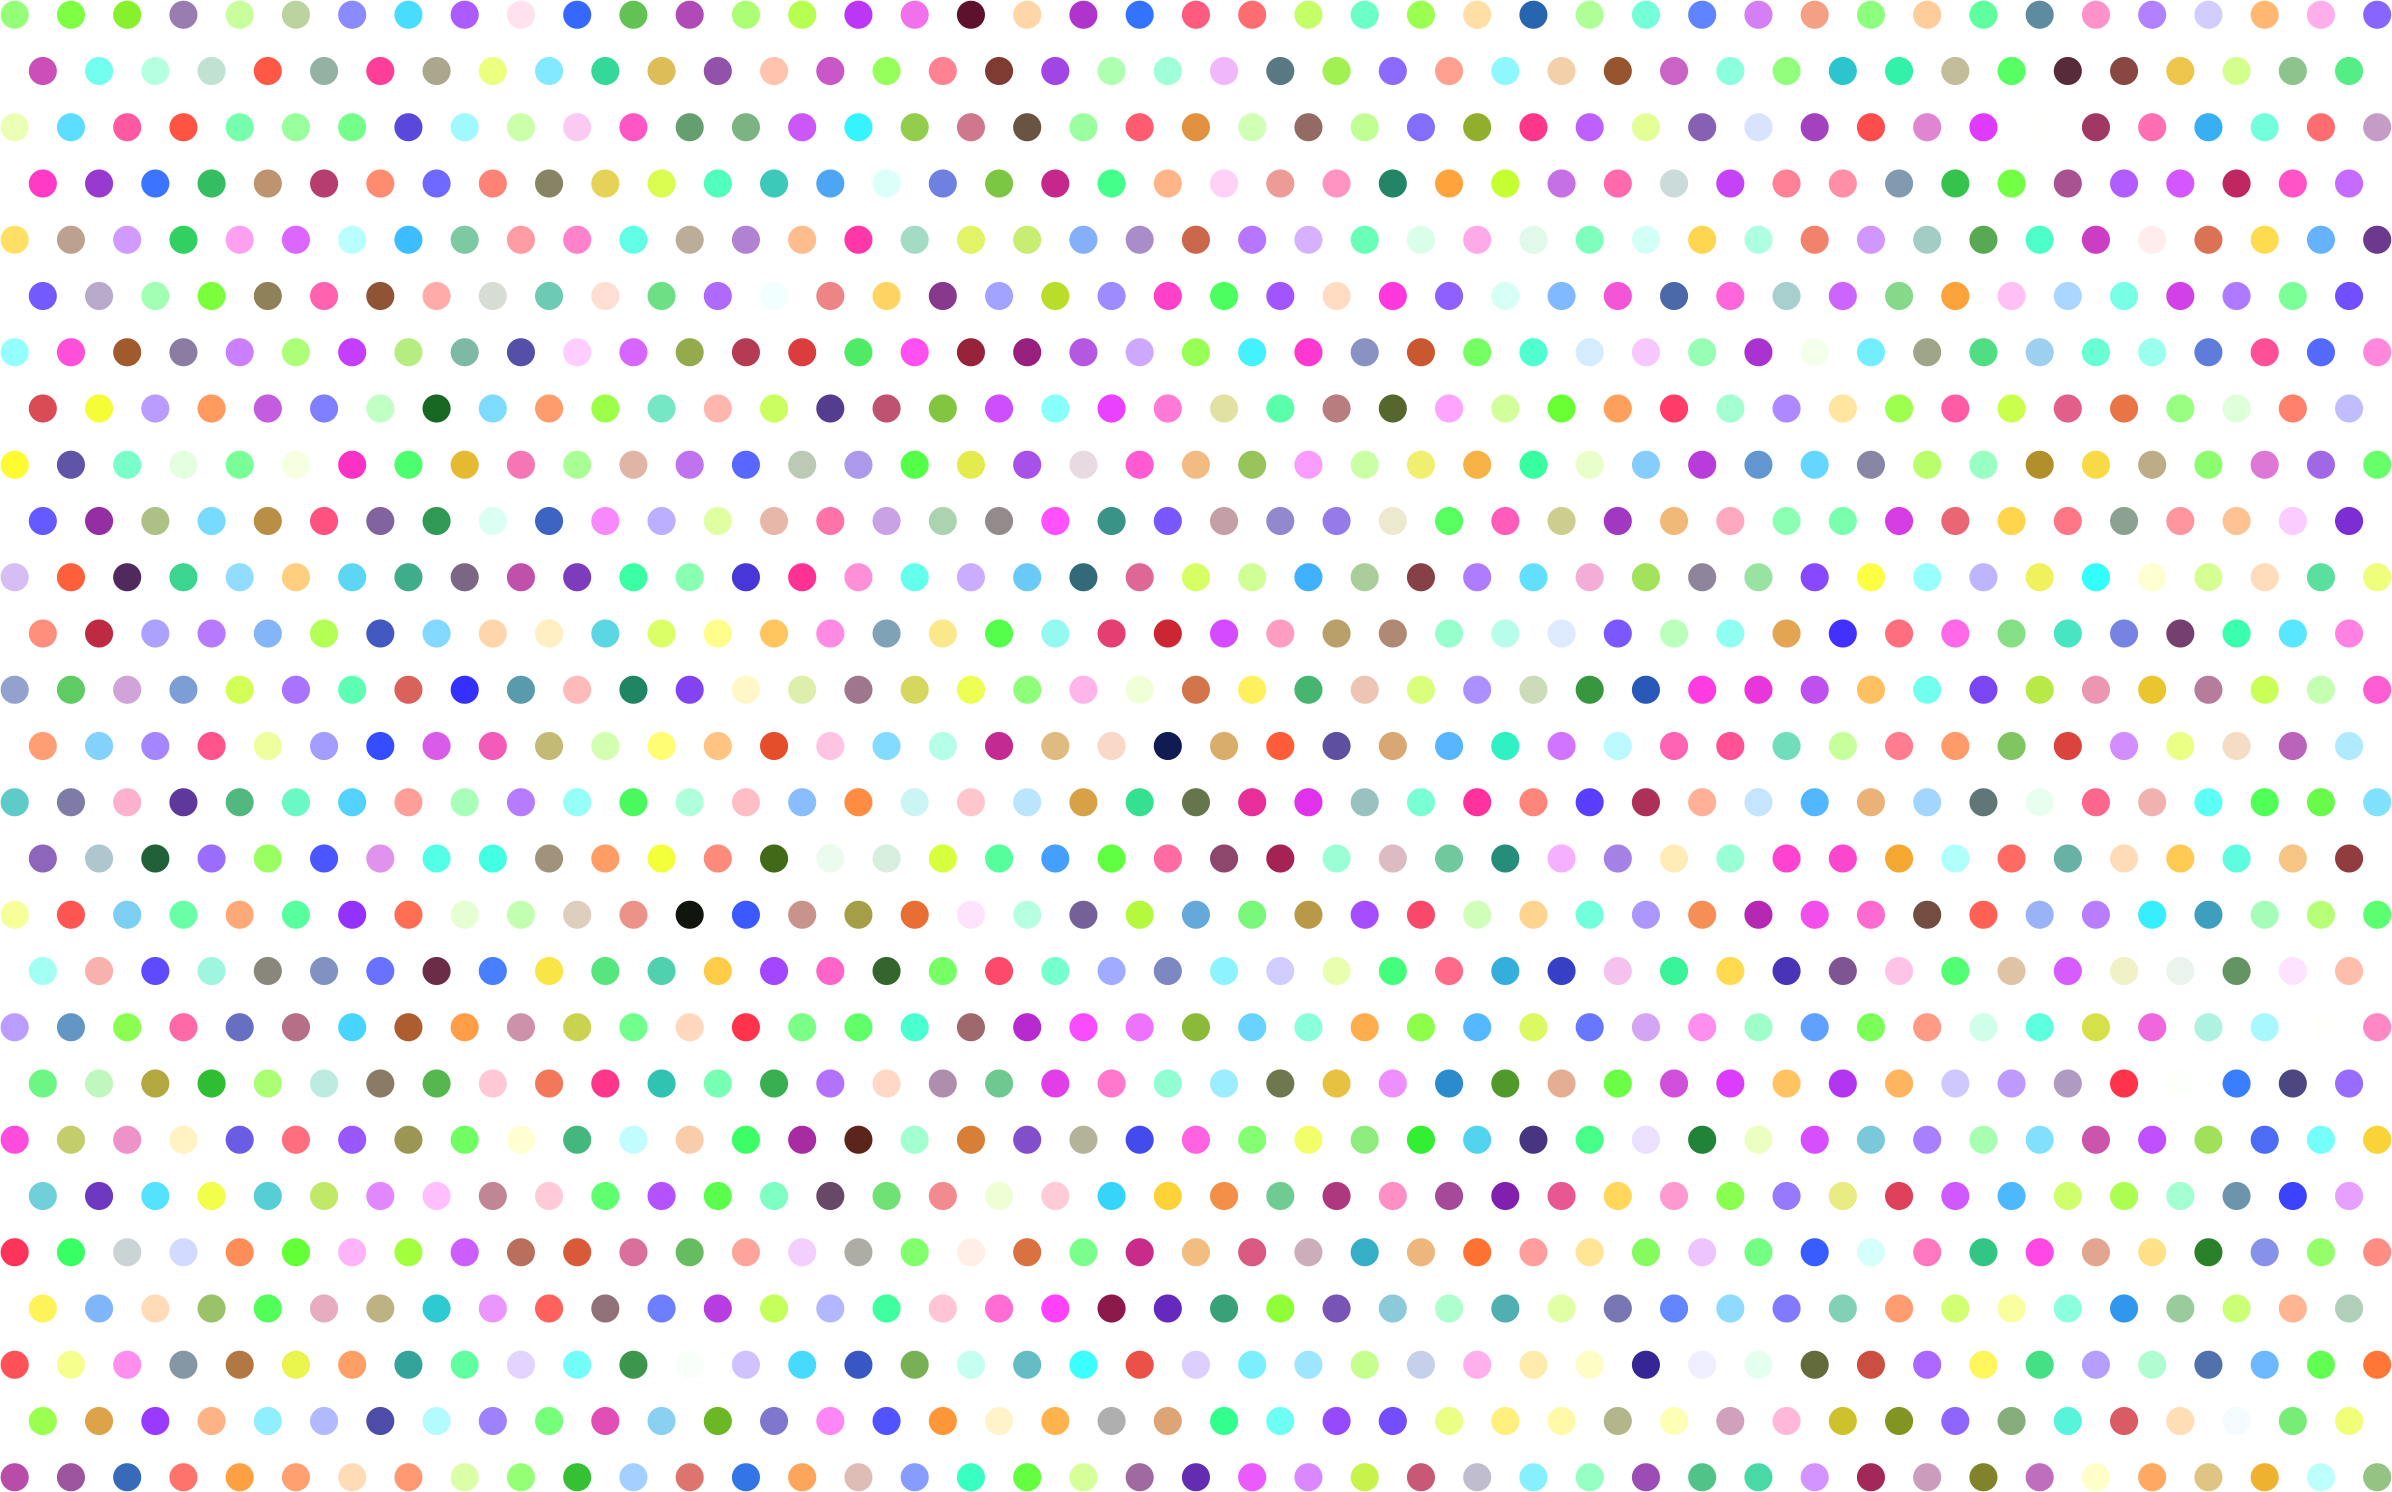 Free Polka Dot Background Png, Download Free Polka Dot Background Png